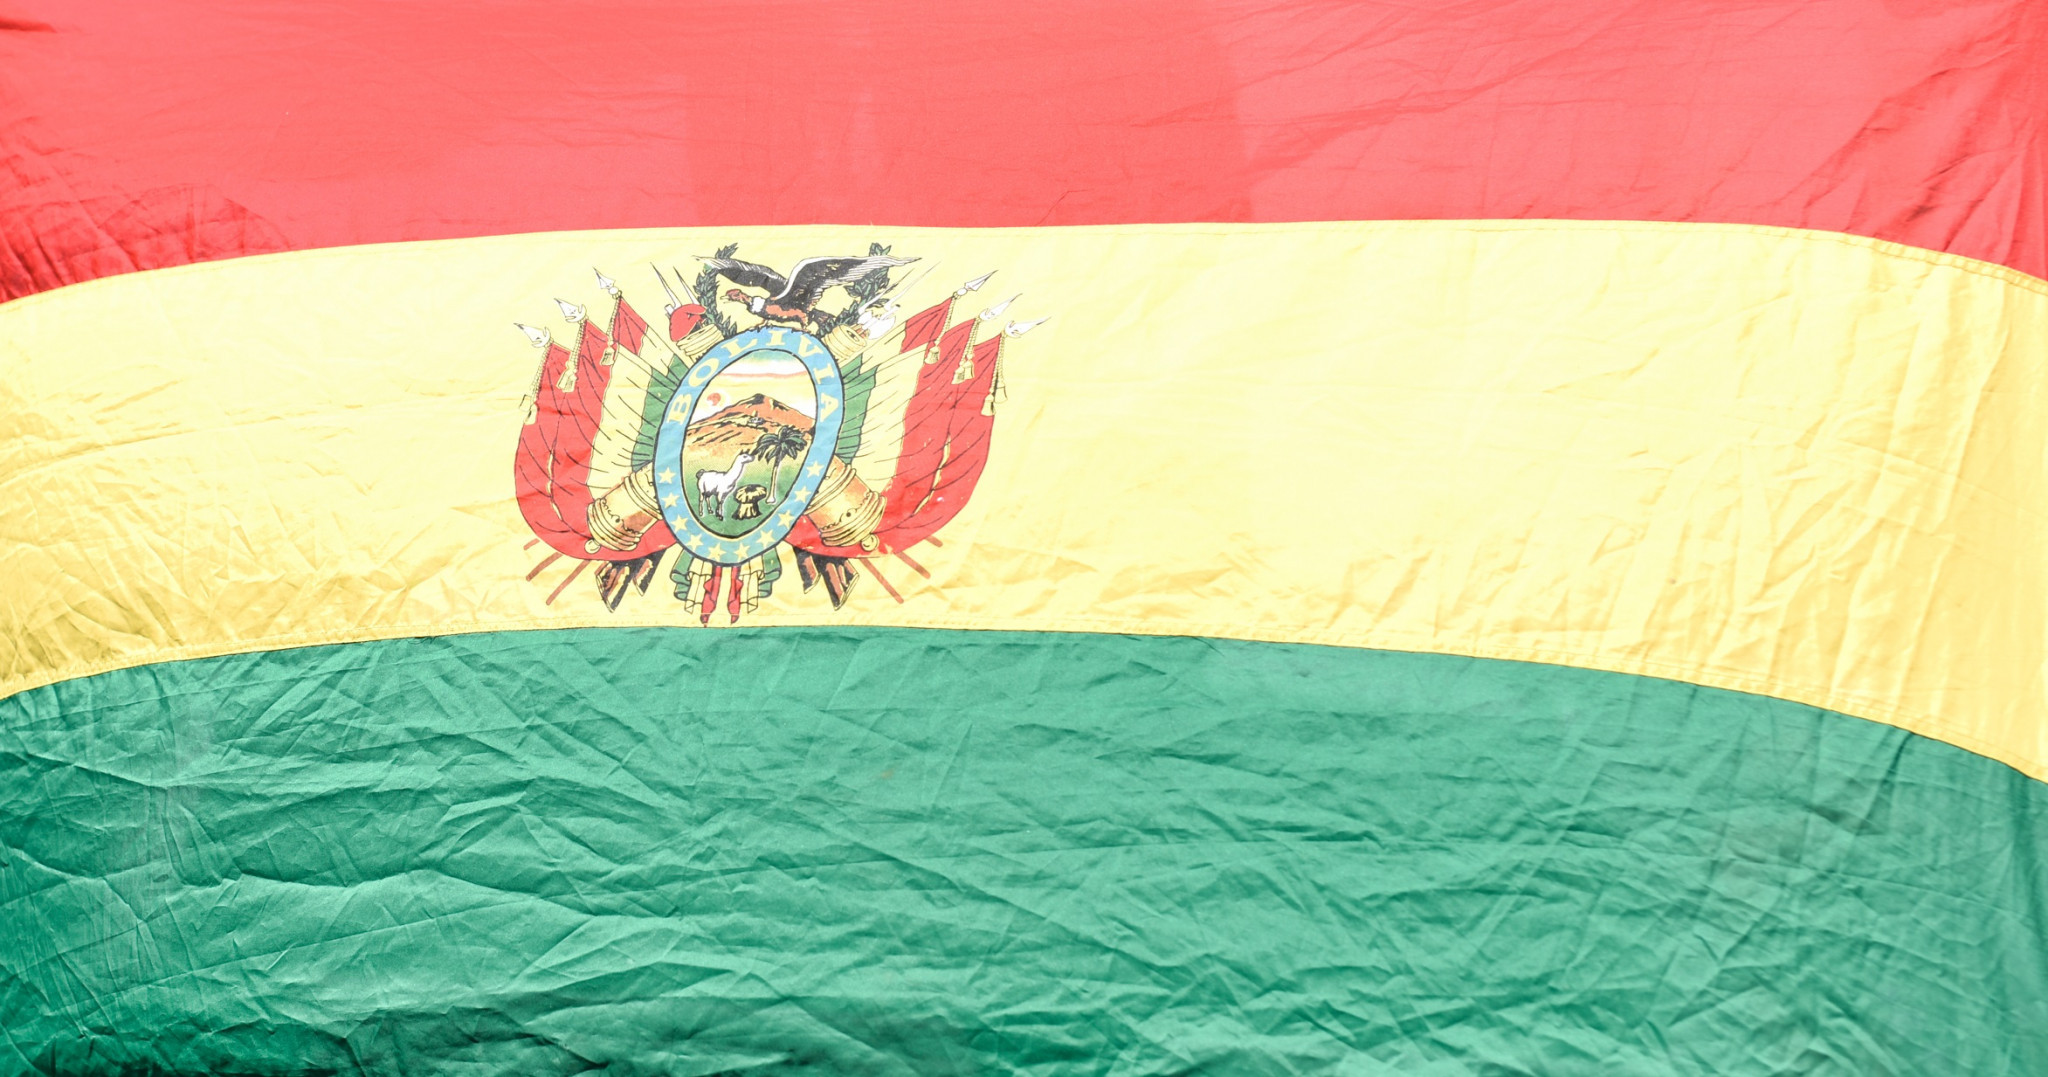 Bolivia becomes member of International Mixed Martial Arts Federation